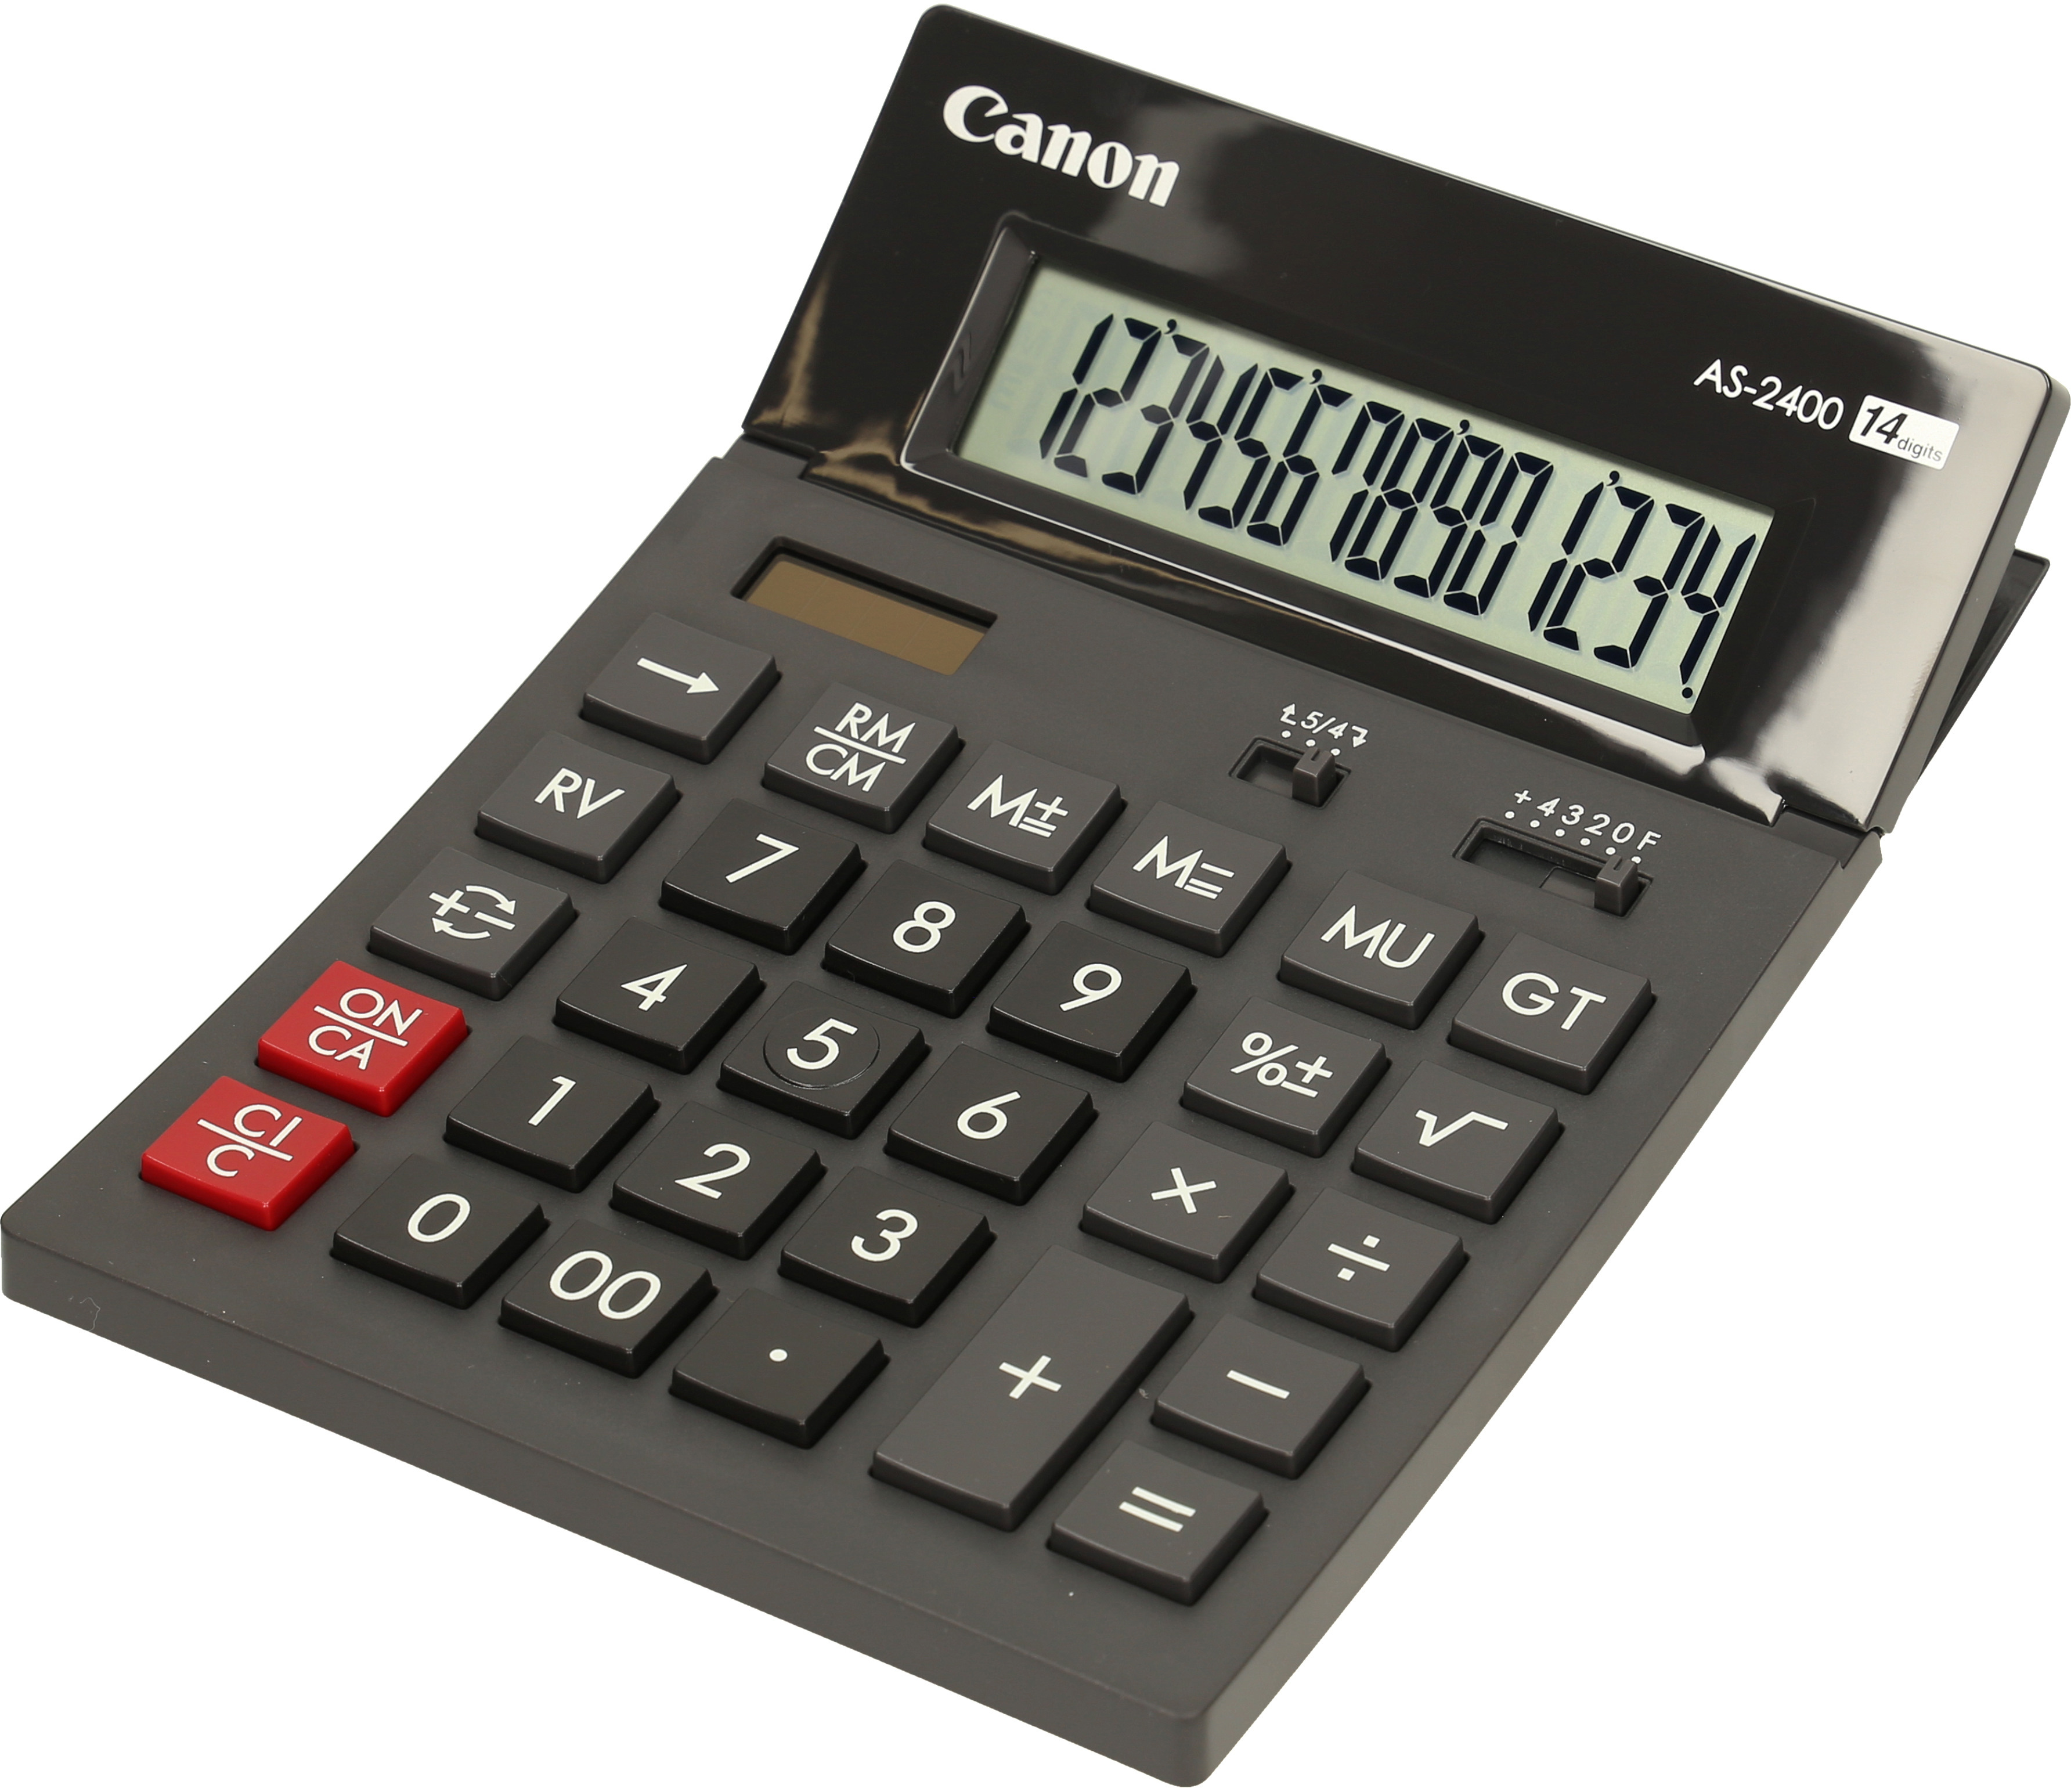 CANON Calculatrice de bureau CA-AS2400 14 chiffres